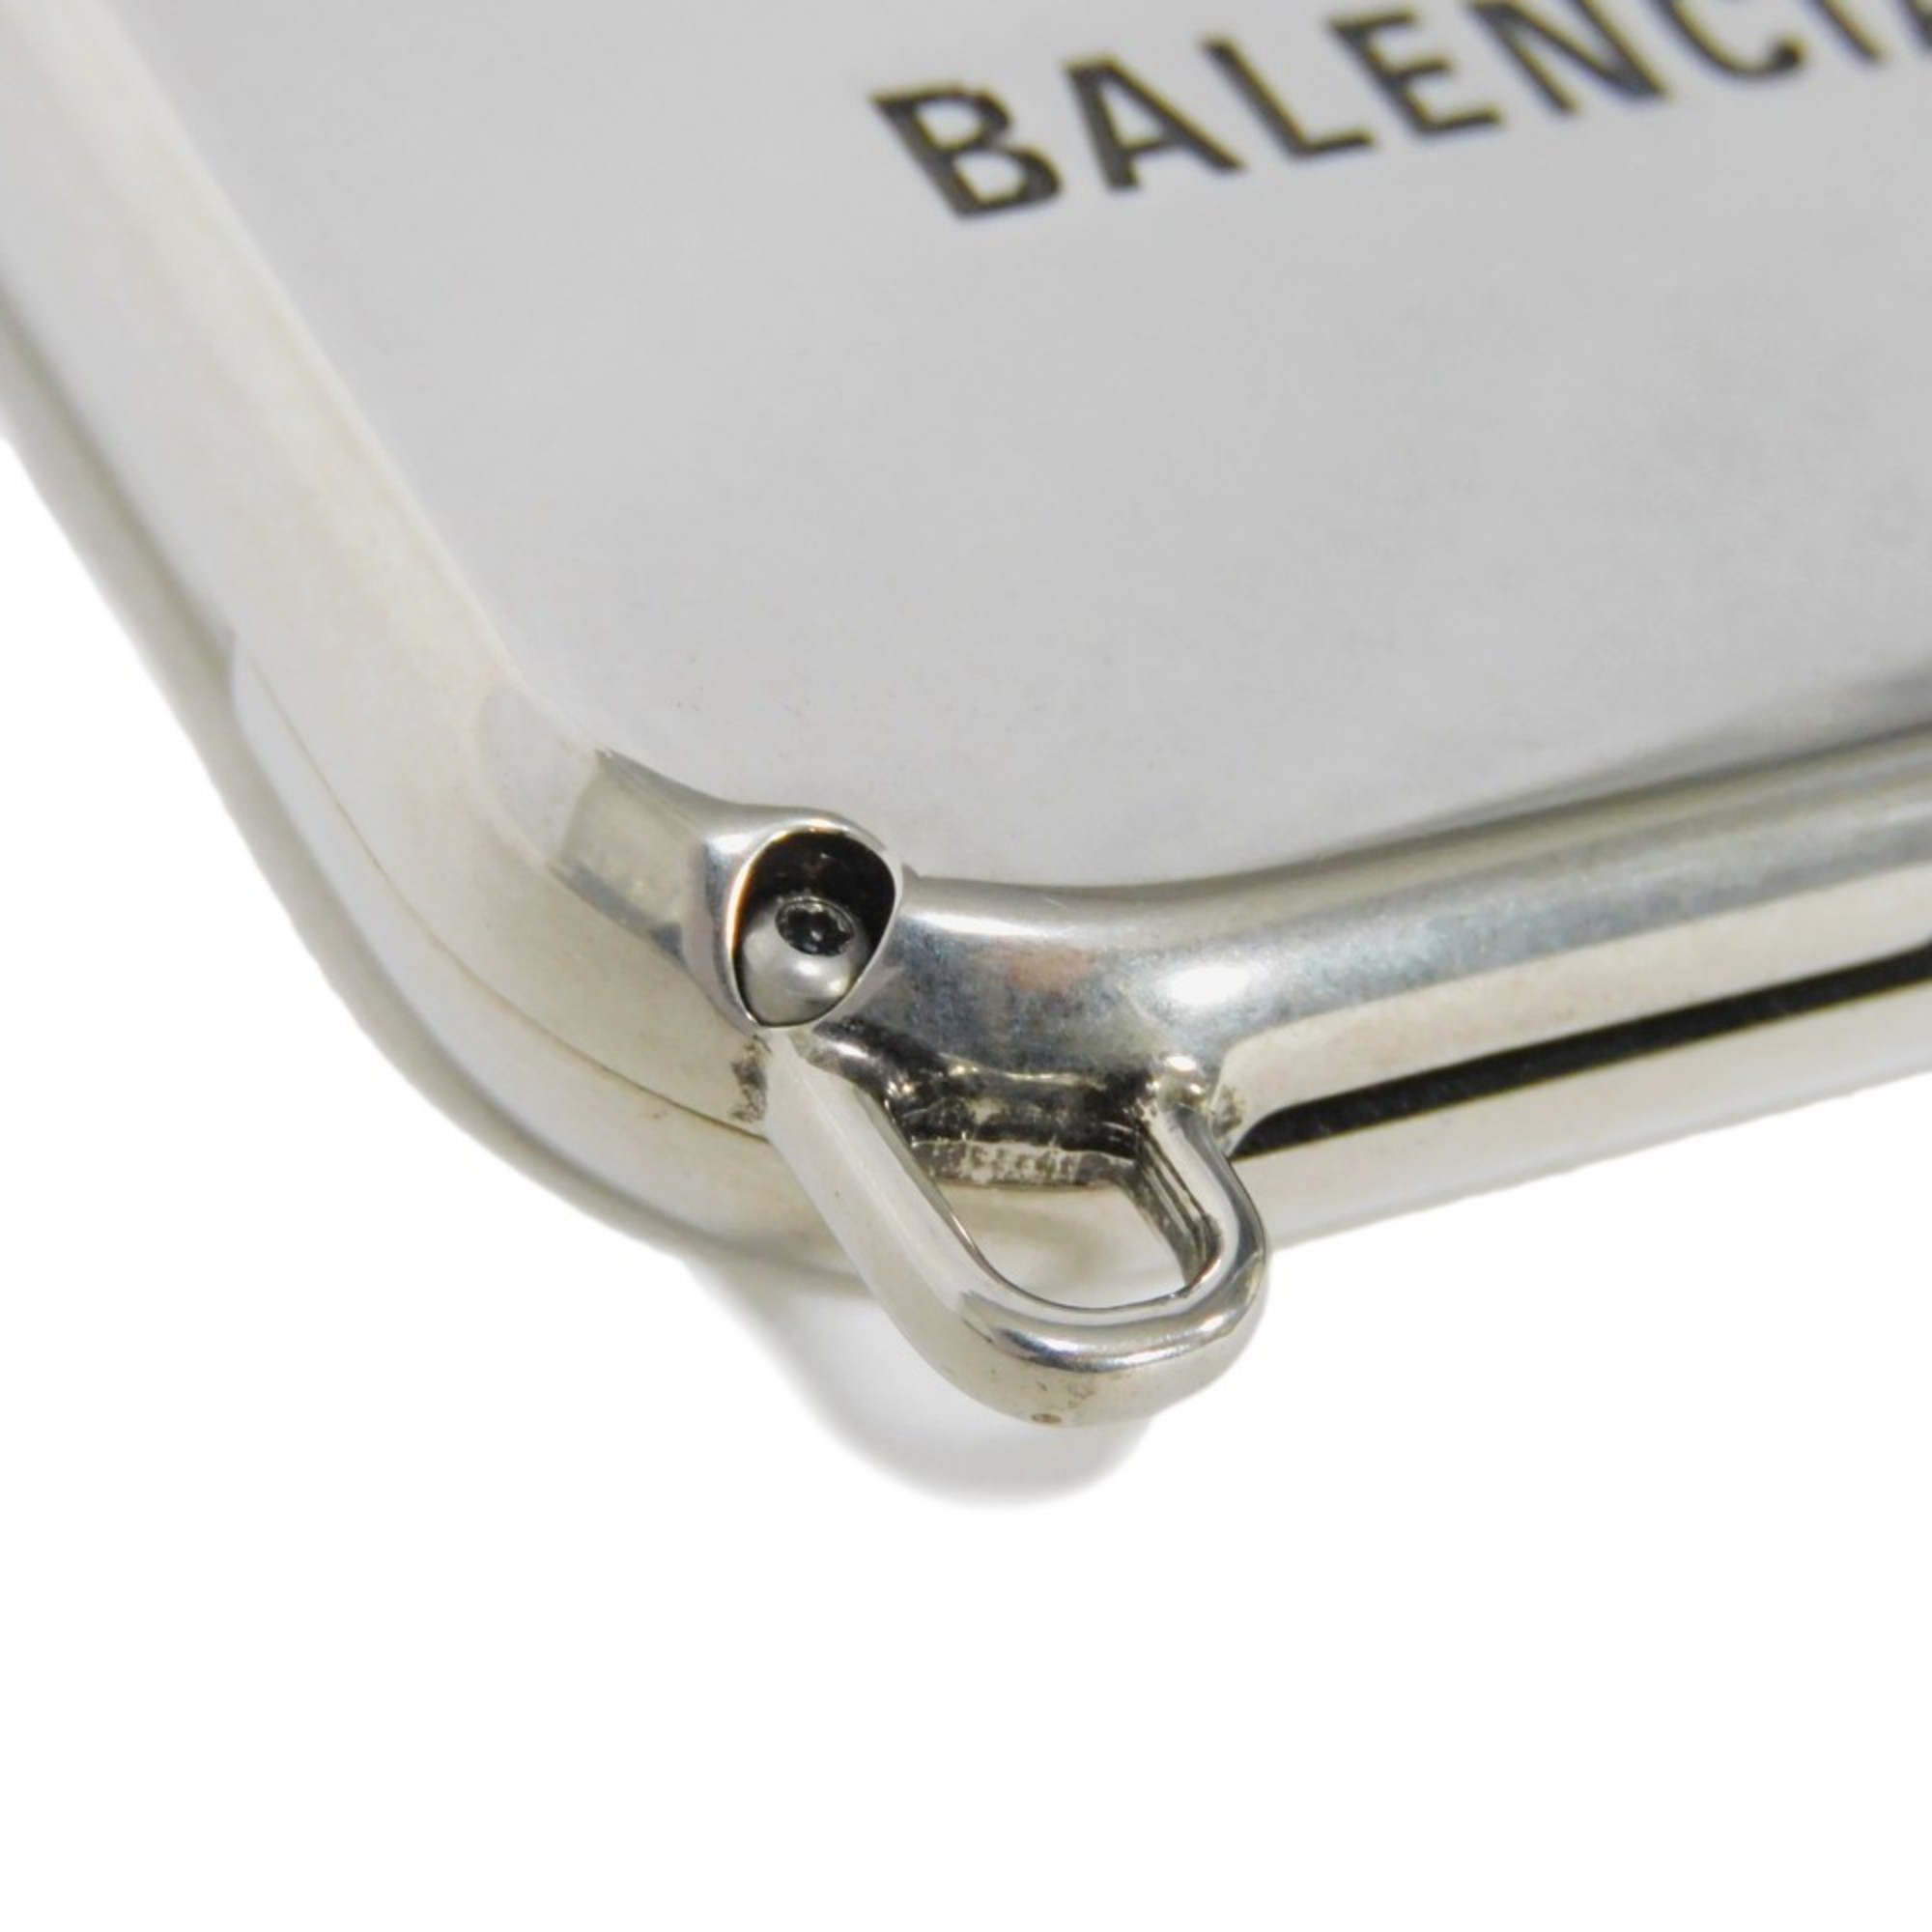 BALENCIAGA Smartphone Case iPhone 12 Chain Black New Embossed Metal Silver 667591 JFC1Y 8122 Men's Women's